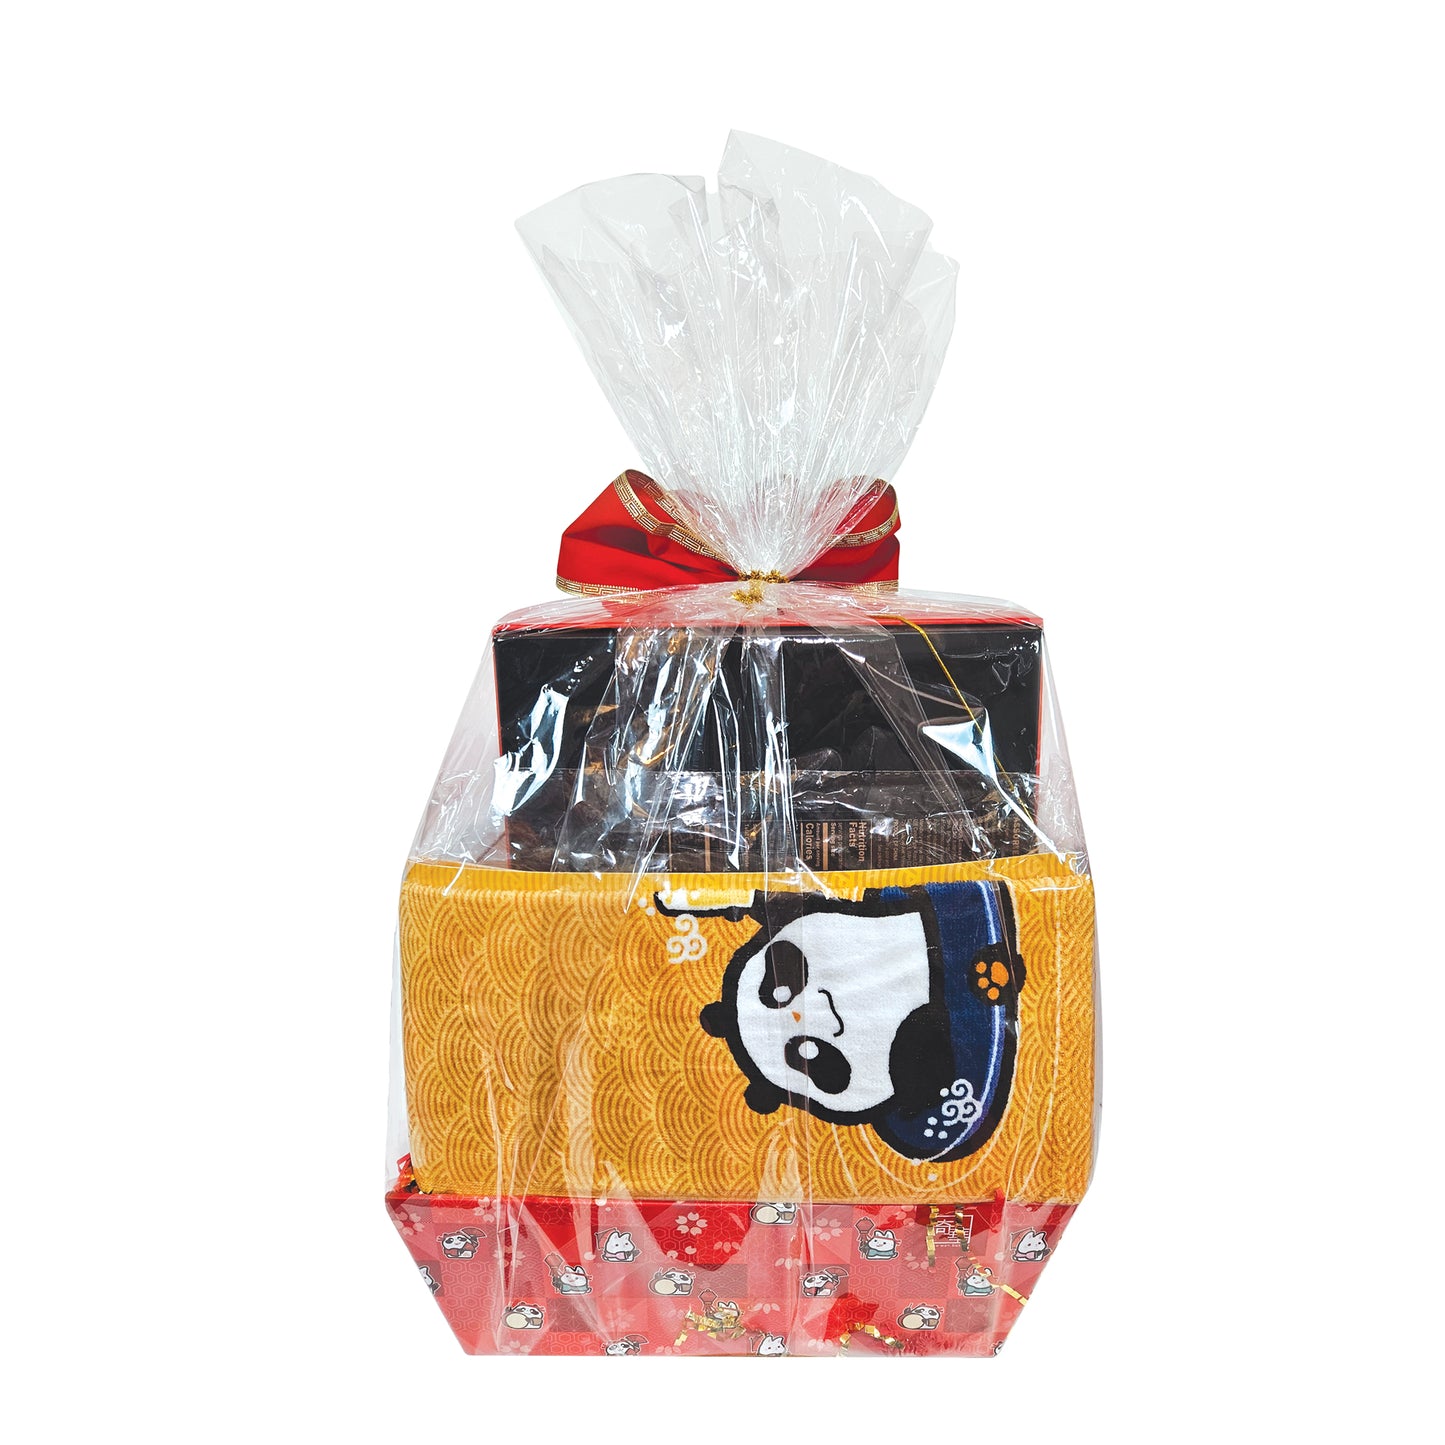 Kee Wah CNY Gourmet Gift Basket (Large) Free Shipping 奇華賀年美食禮品籃(大) 免運費